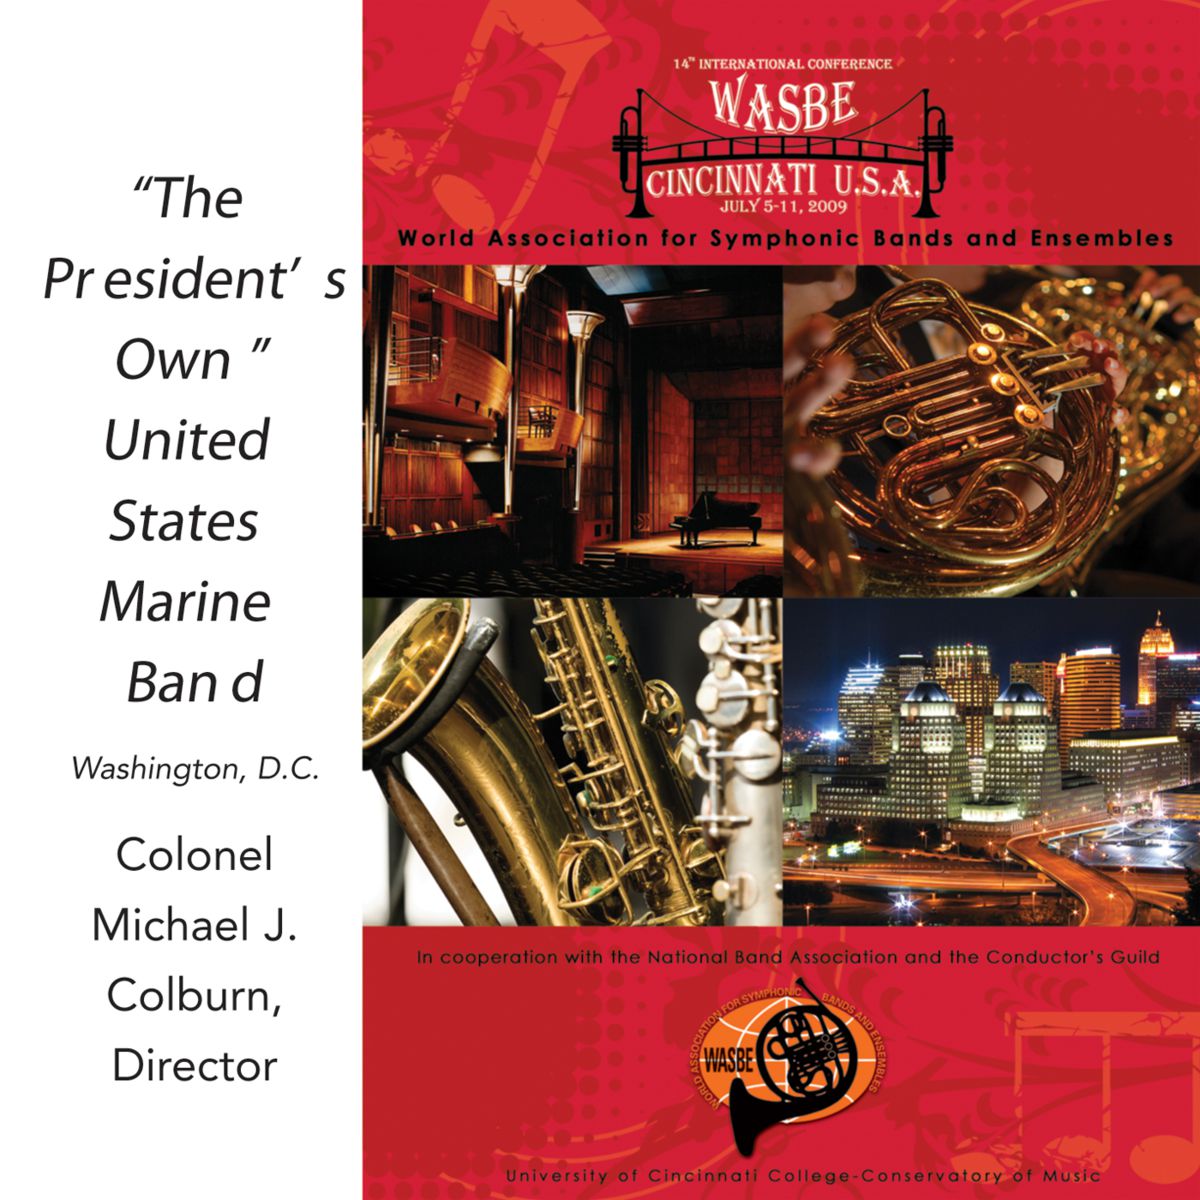 2009 WASBE Cincinnati, USA: "The Presidents Own" United States Marine Band - clicca qui